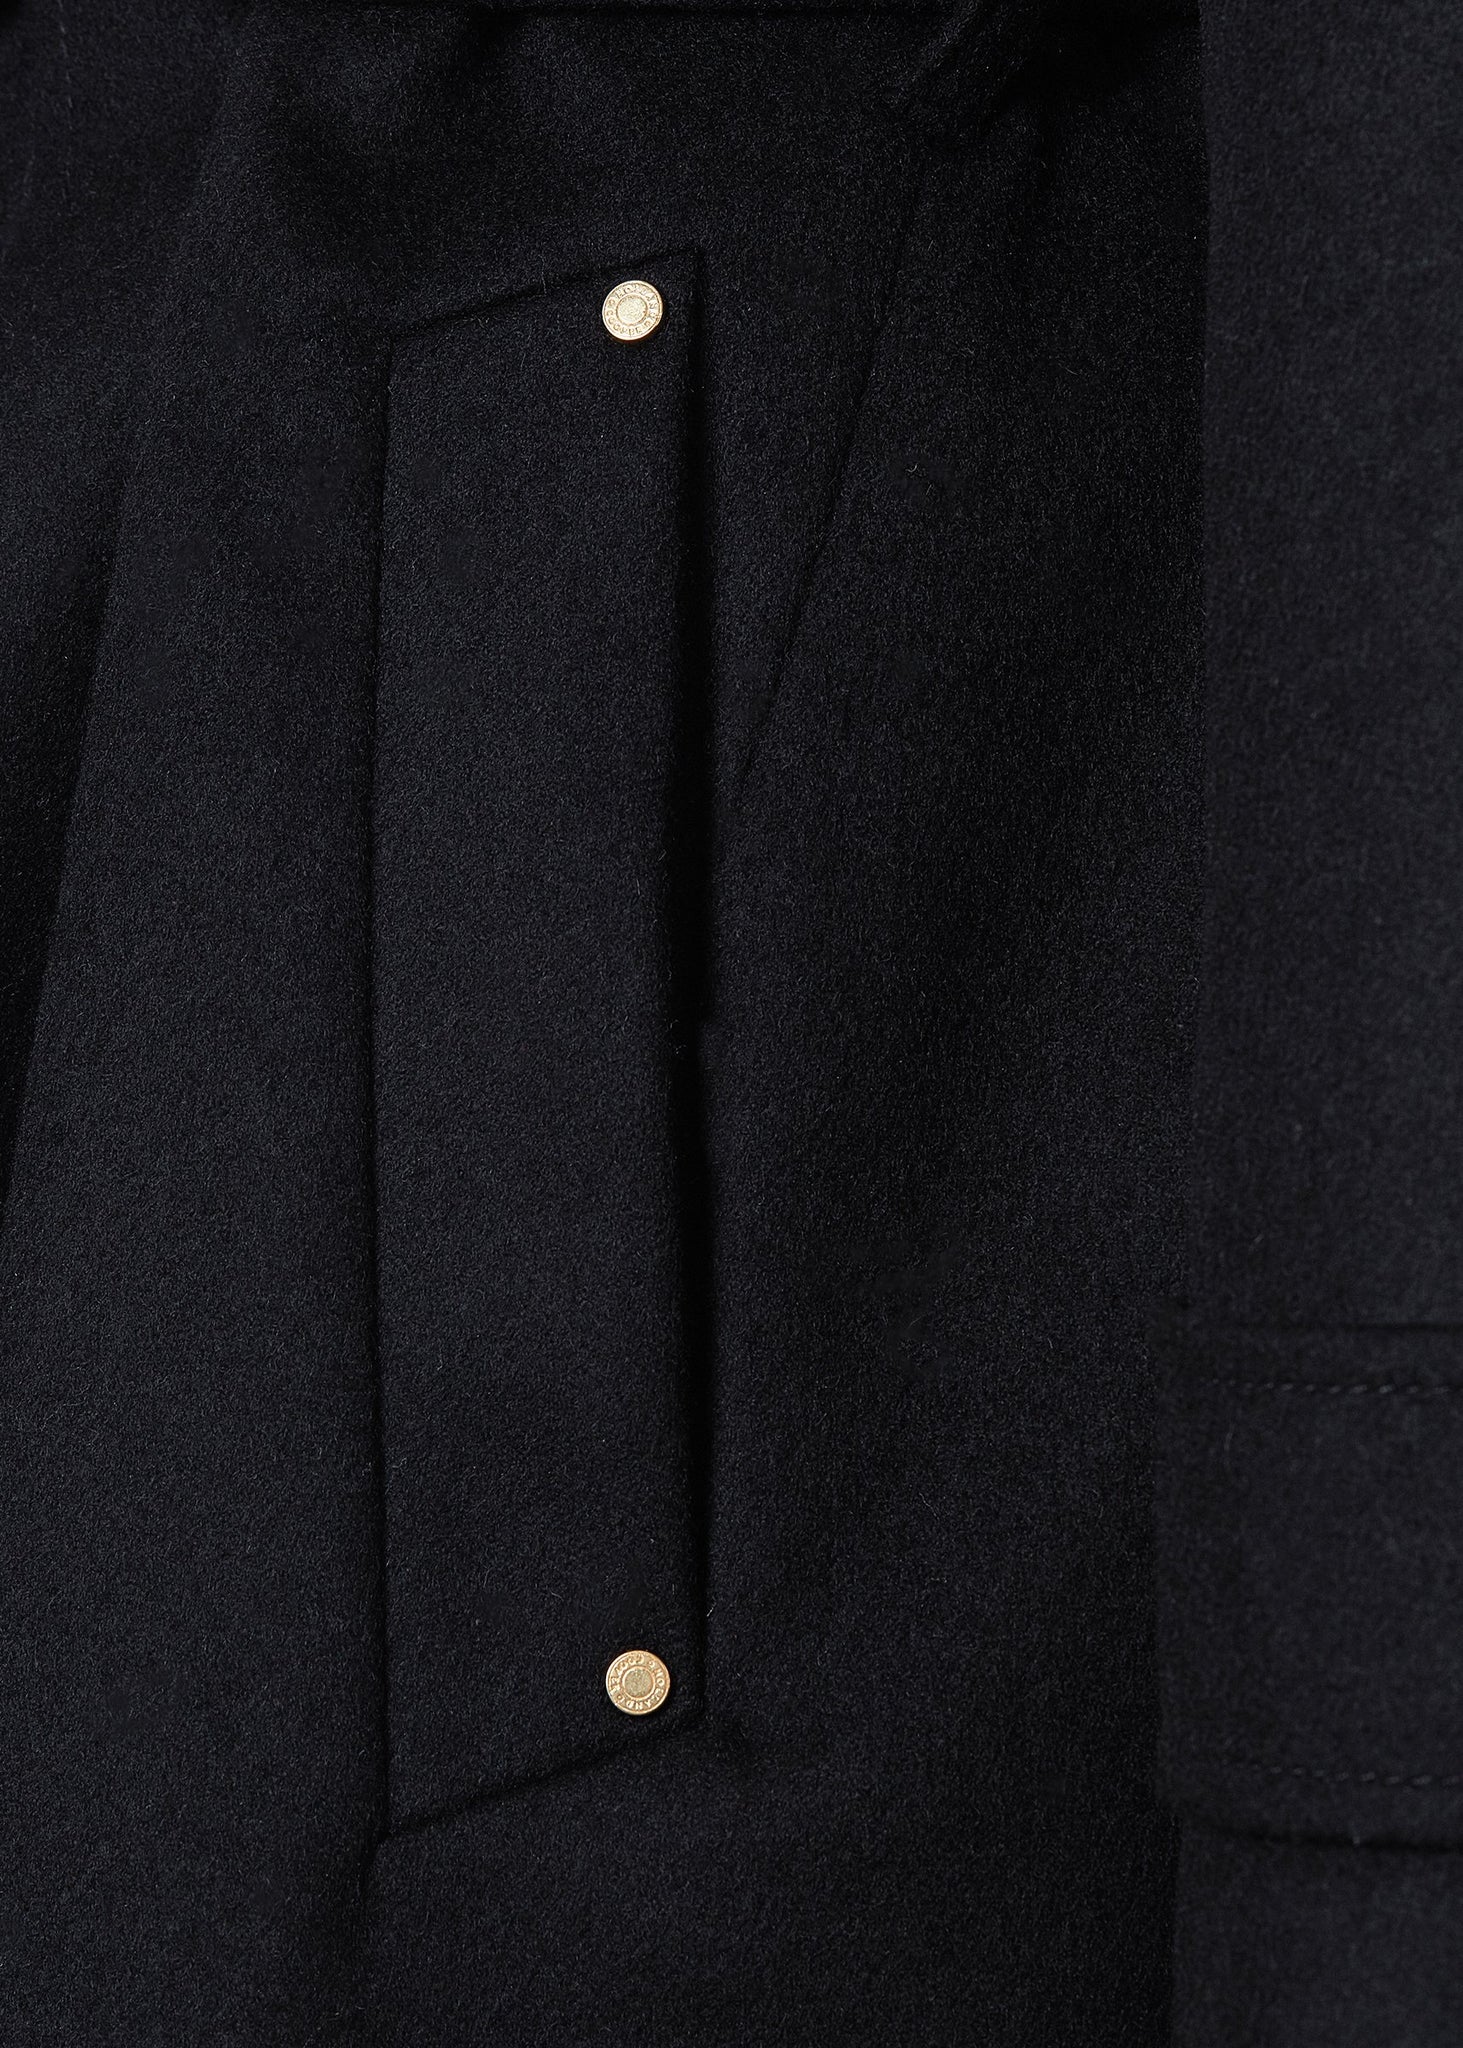 pocket detail on Womens black wool mid length wrap coat with tie belt